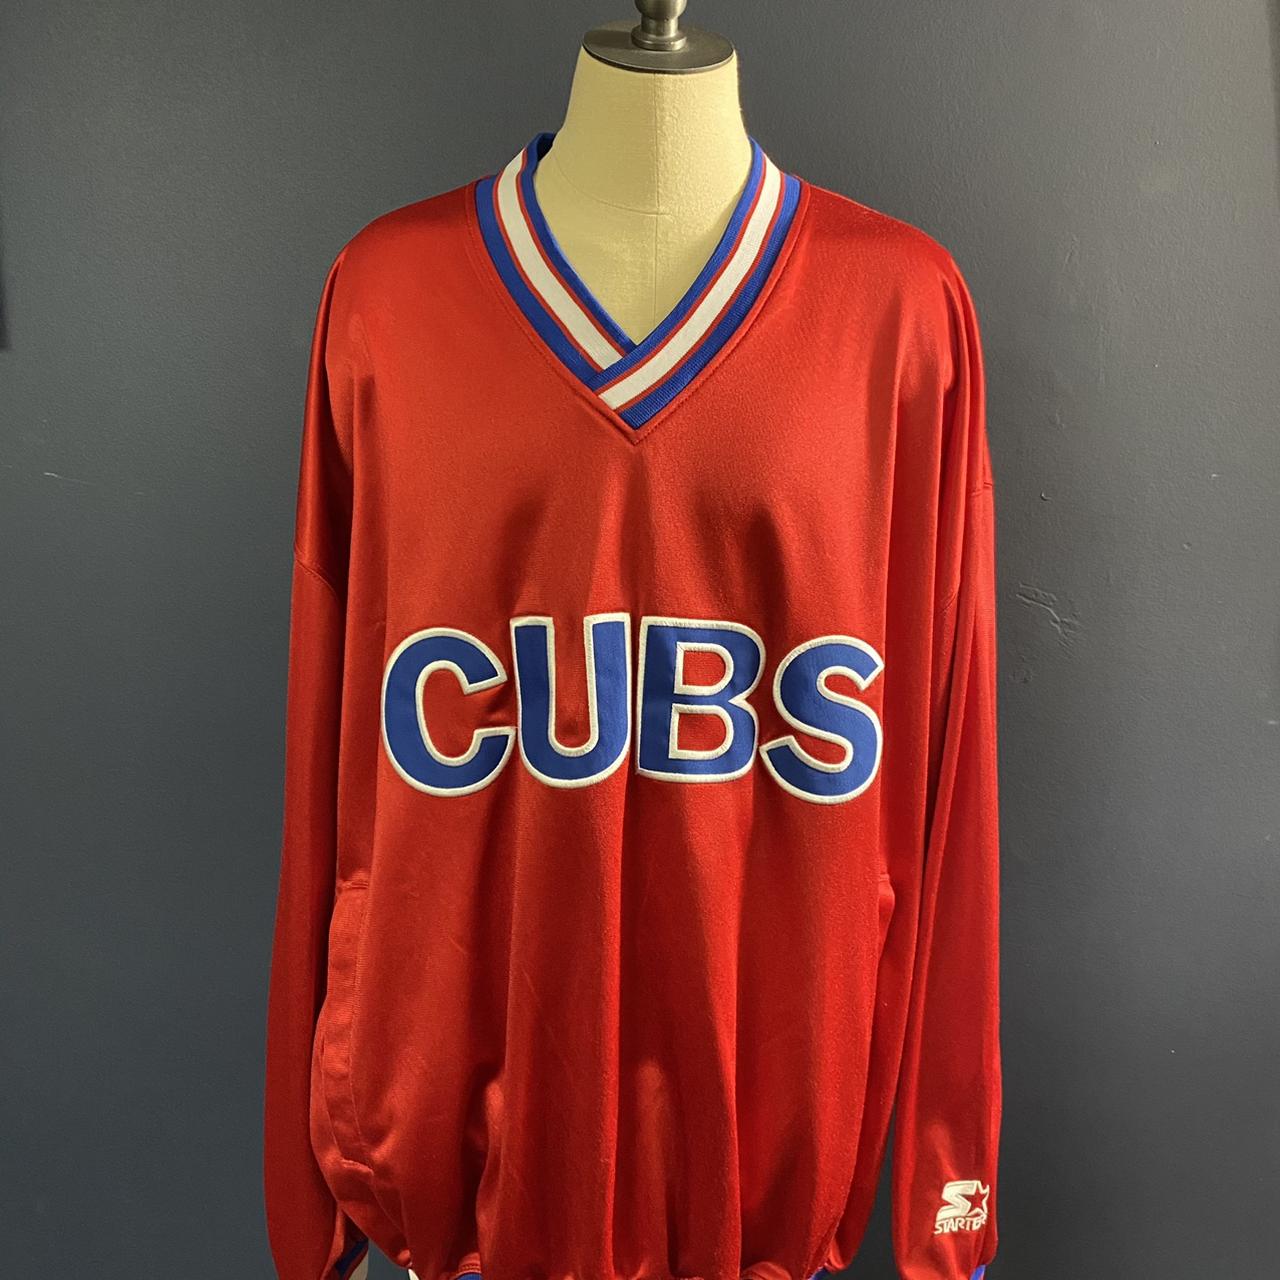 Vintage 1994 Chicago Cubs Crewneck! Great feedback - Depop